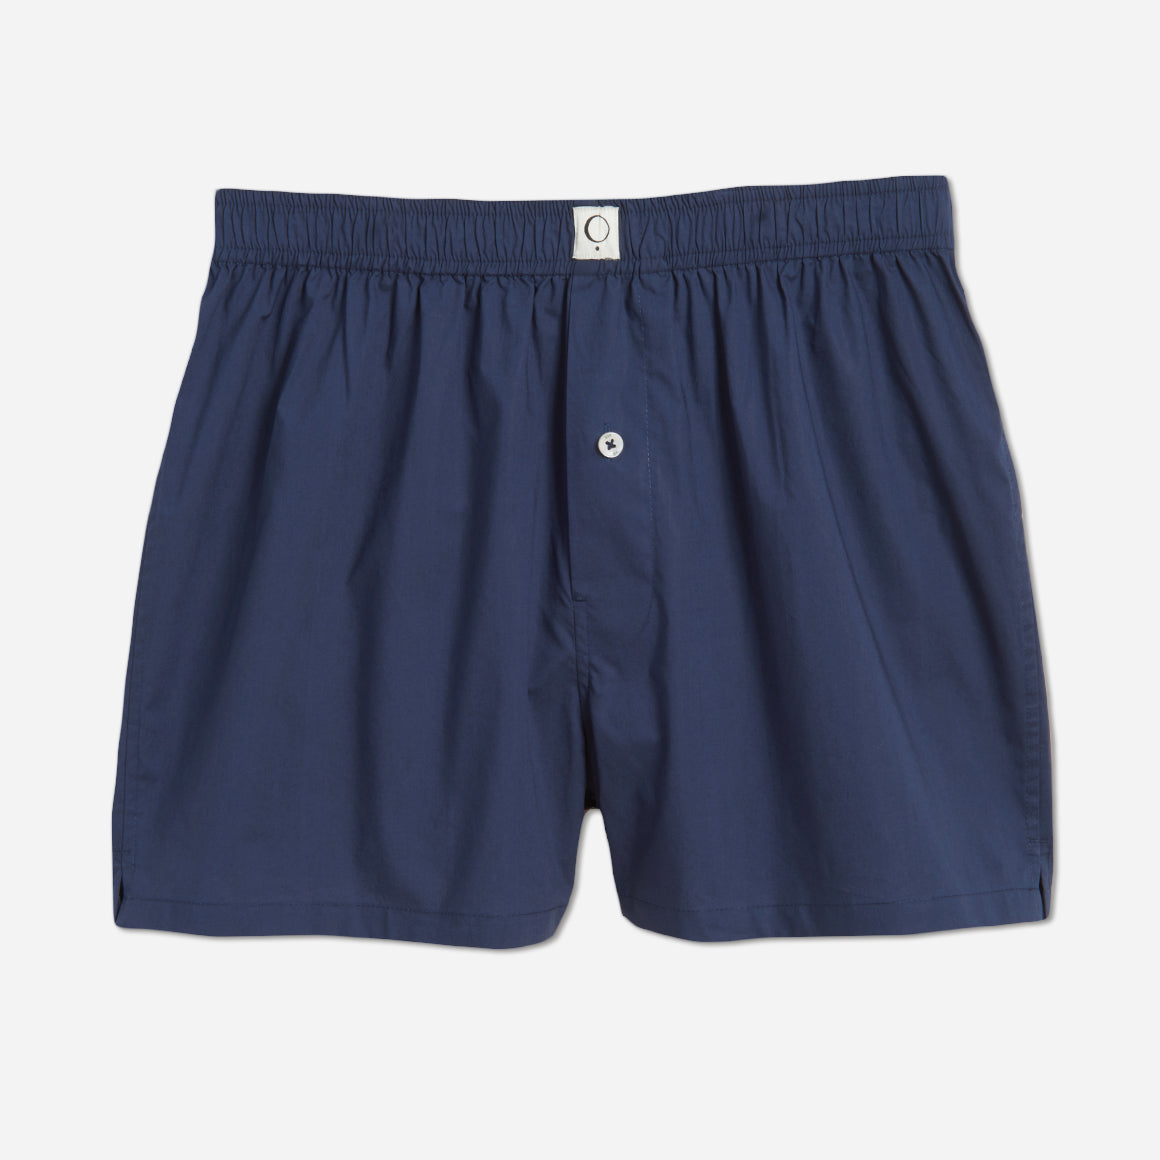 Linen Shorts, Organic Sleep Boxer, Pajama Shorts, Men's Linen Underwear,  Linen Boxers Briefs, Blue Underwear, Men's Flax Gift -  Canada